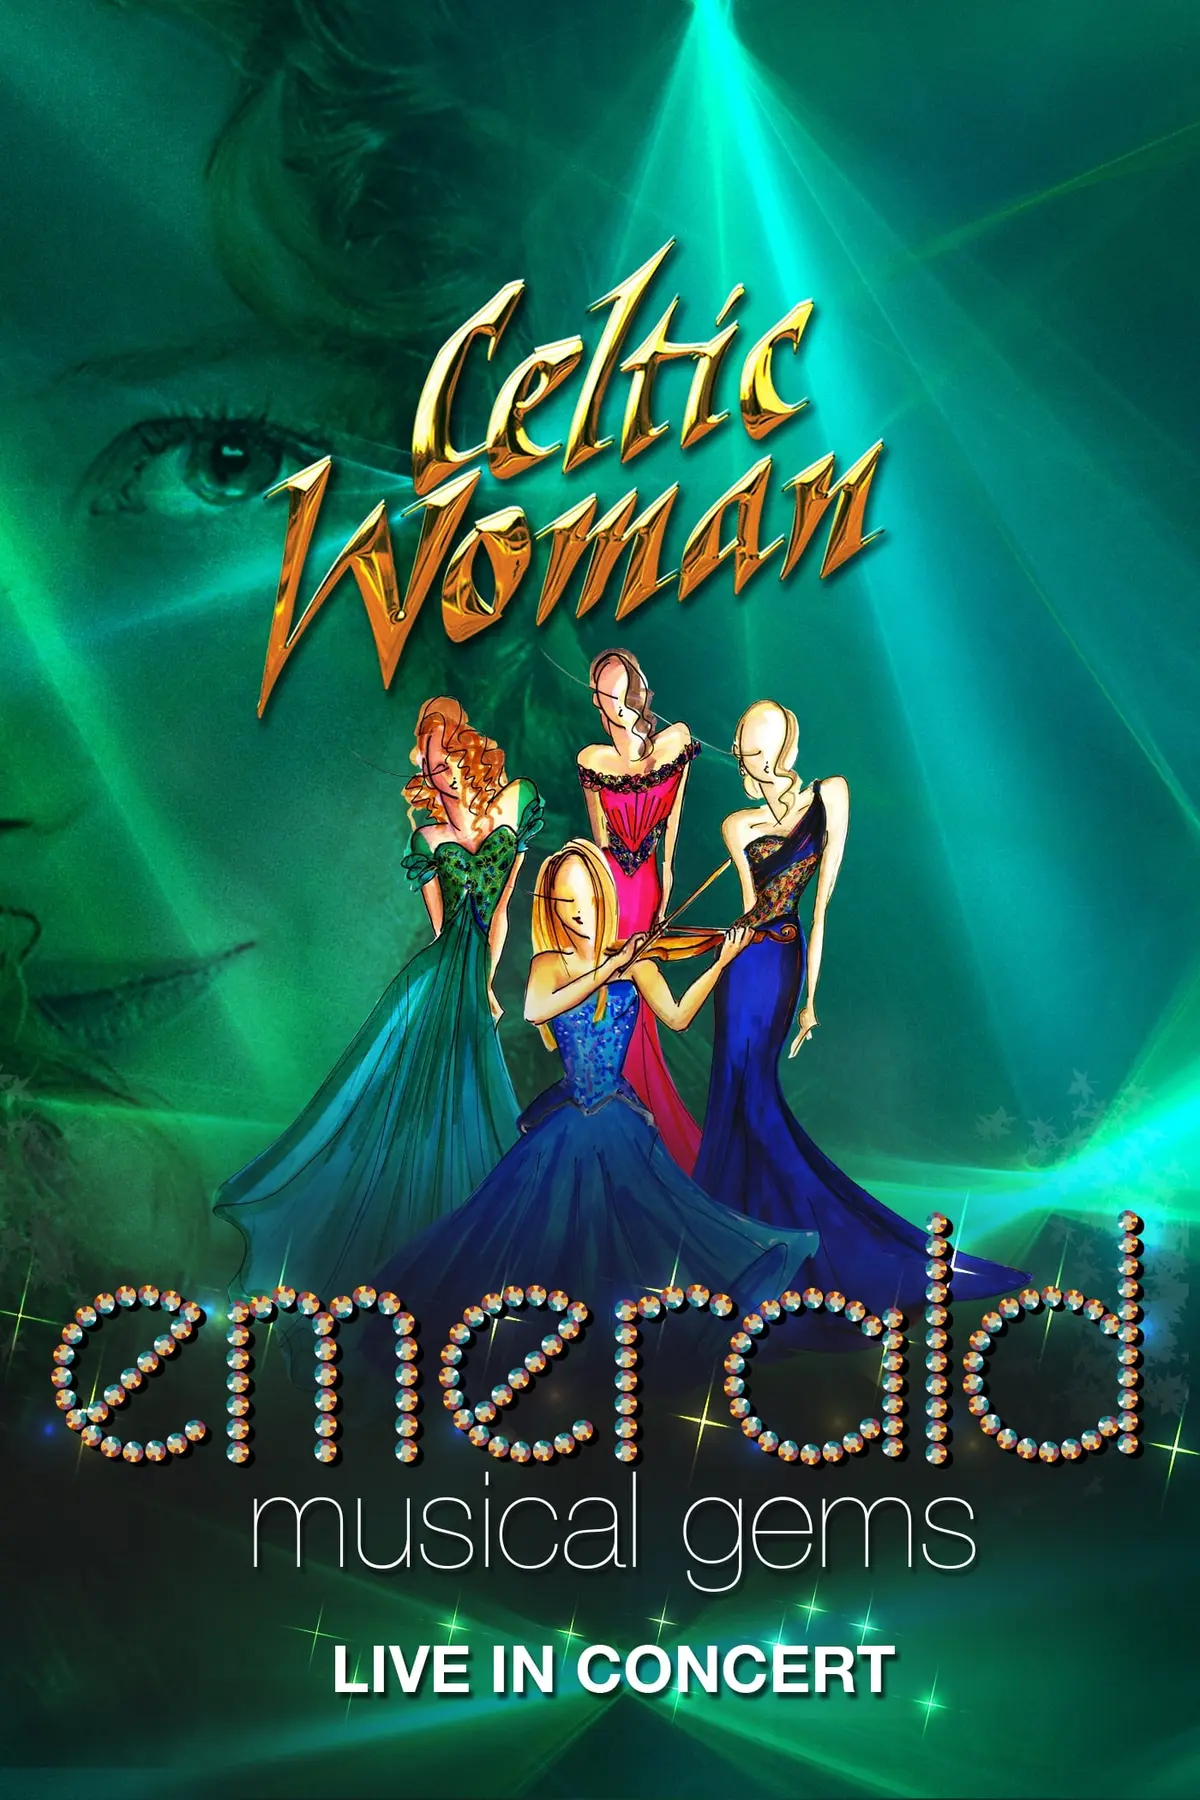 Celtic Woman: Emerald Musical Gems